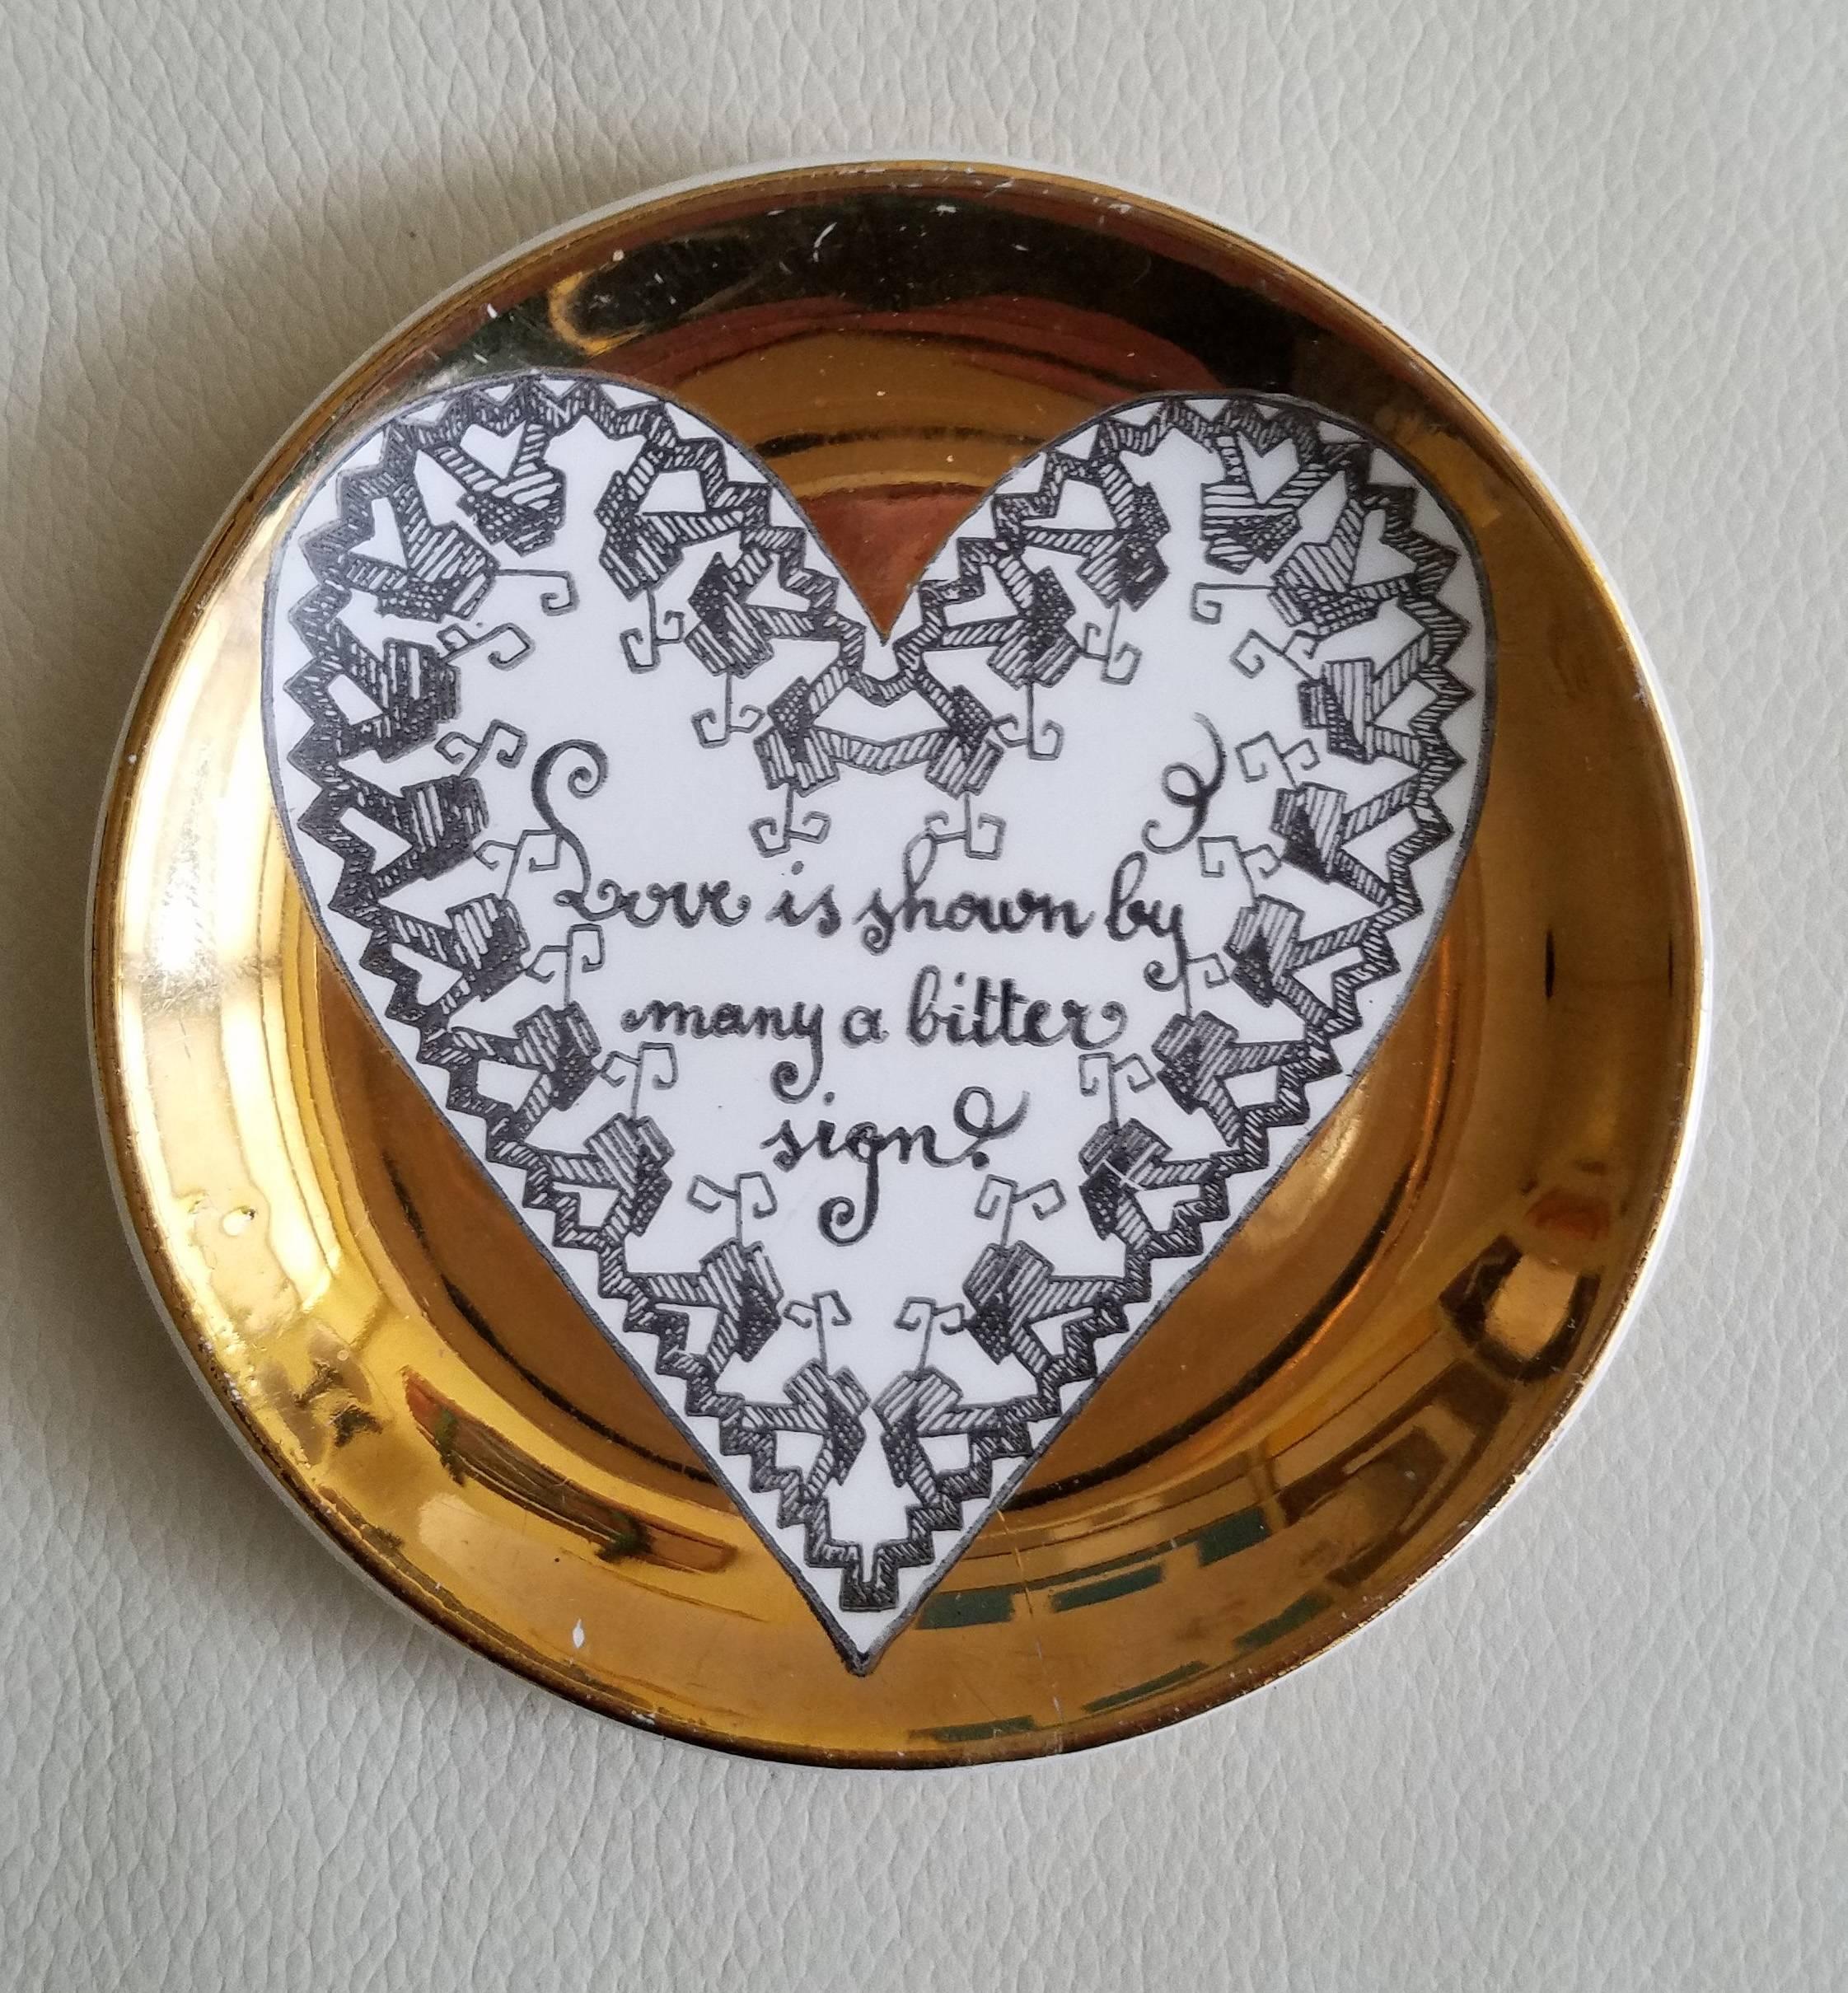 Italian Piero Fornasetti Porcelain Coaster Set with Love, Hearts and Saying